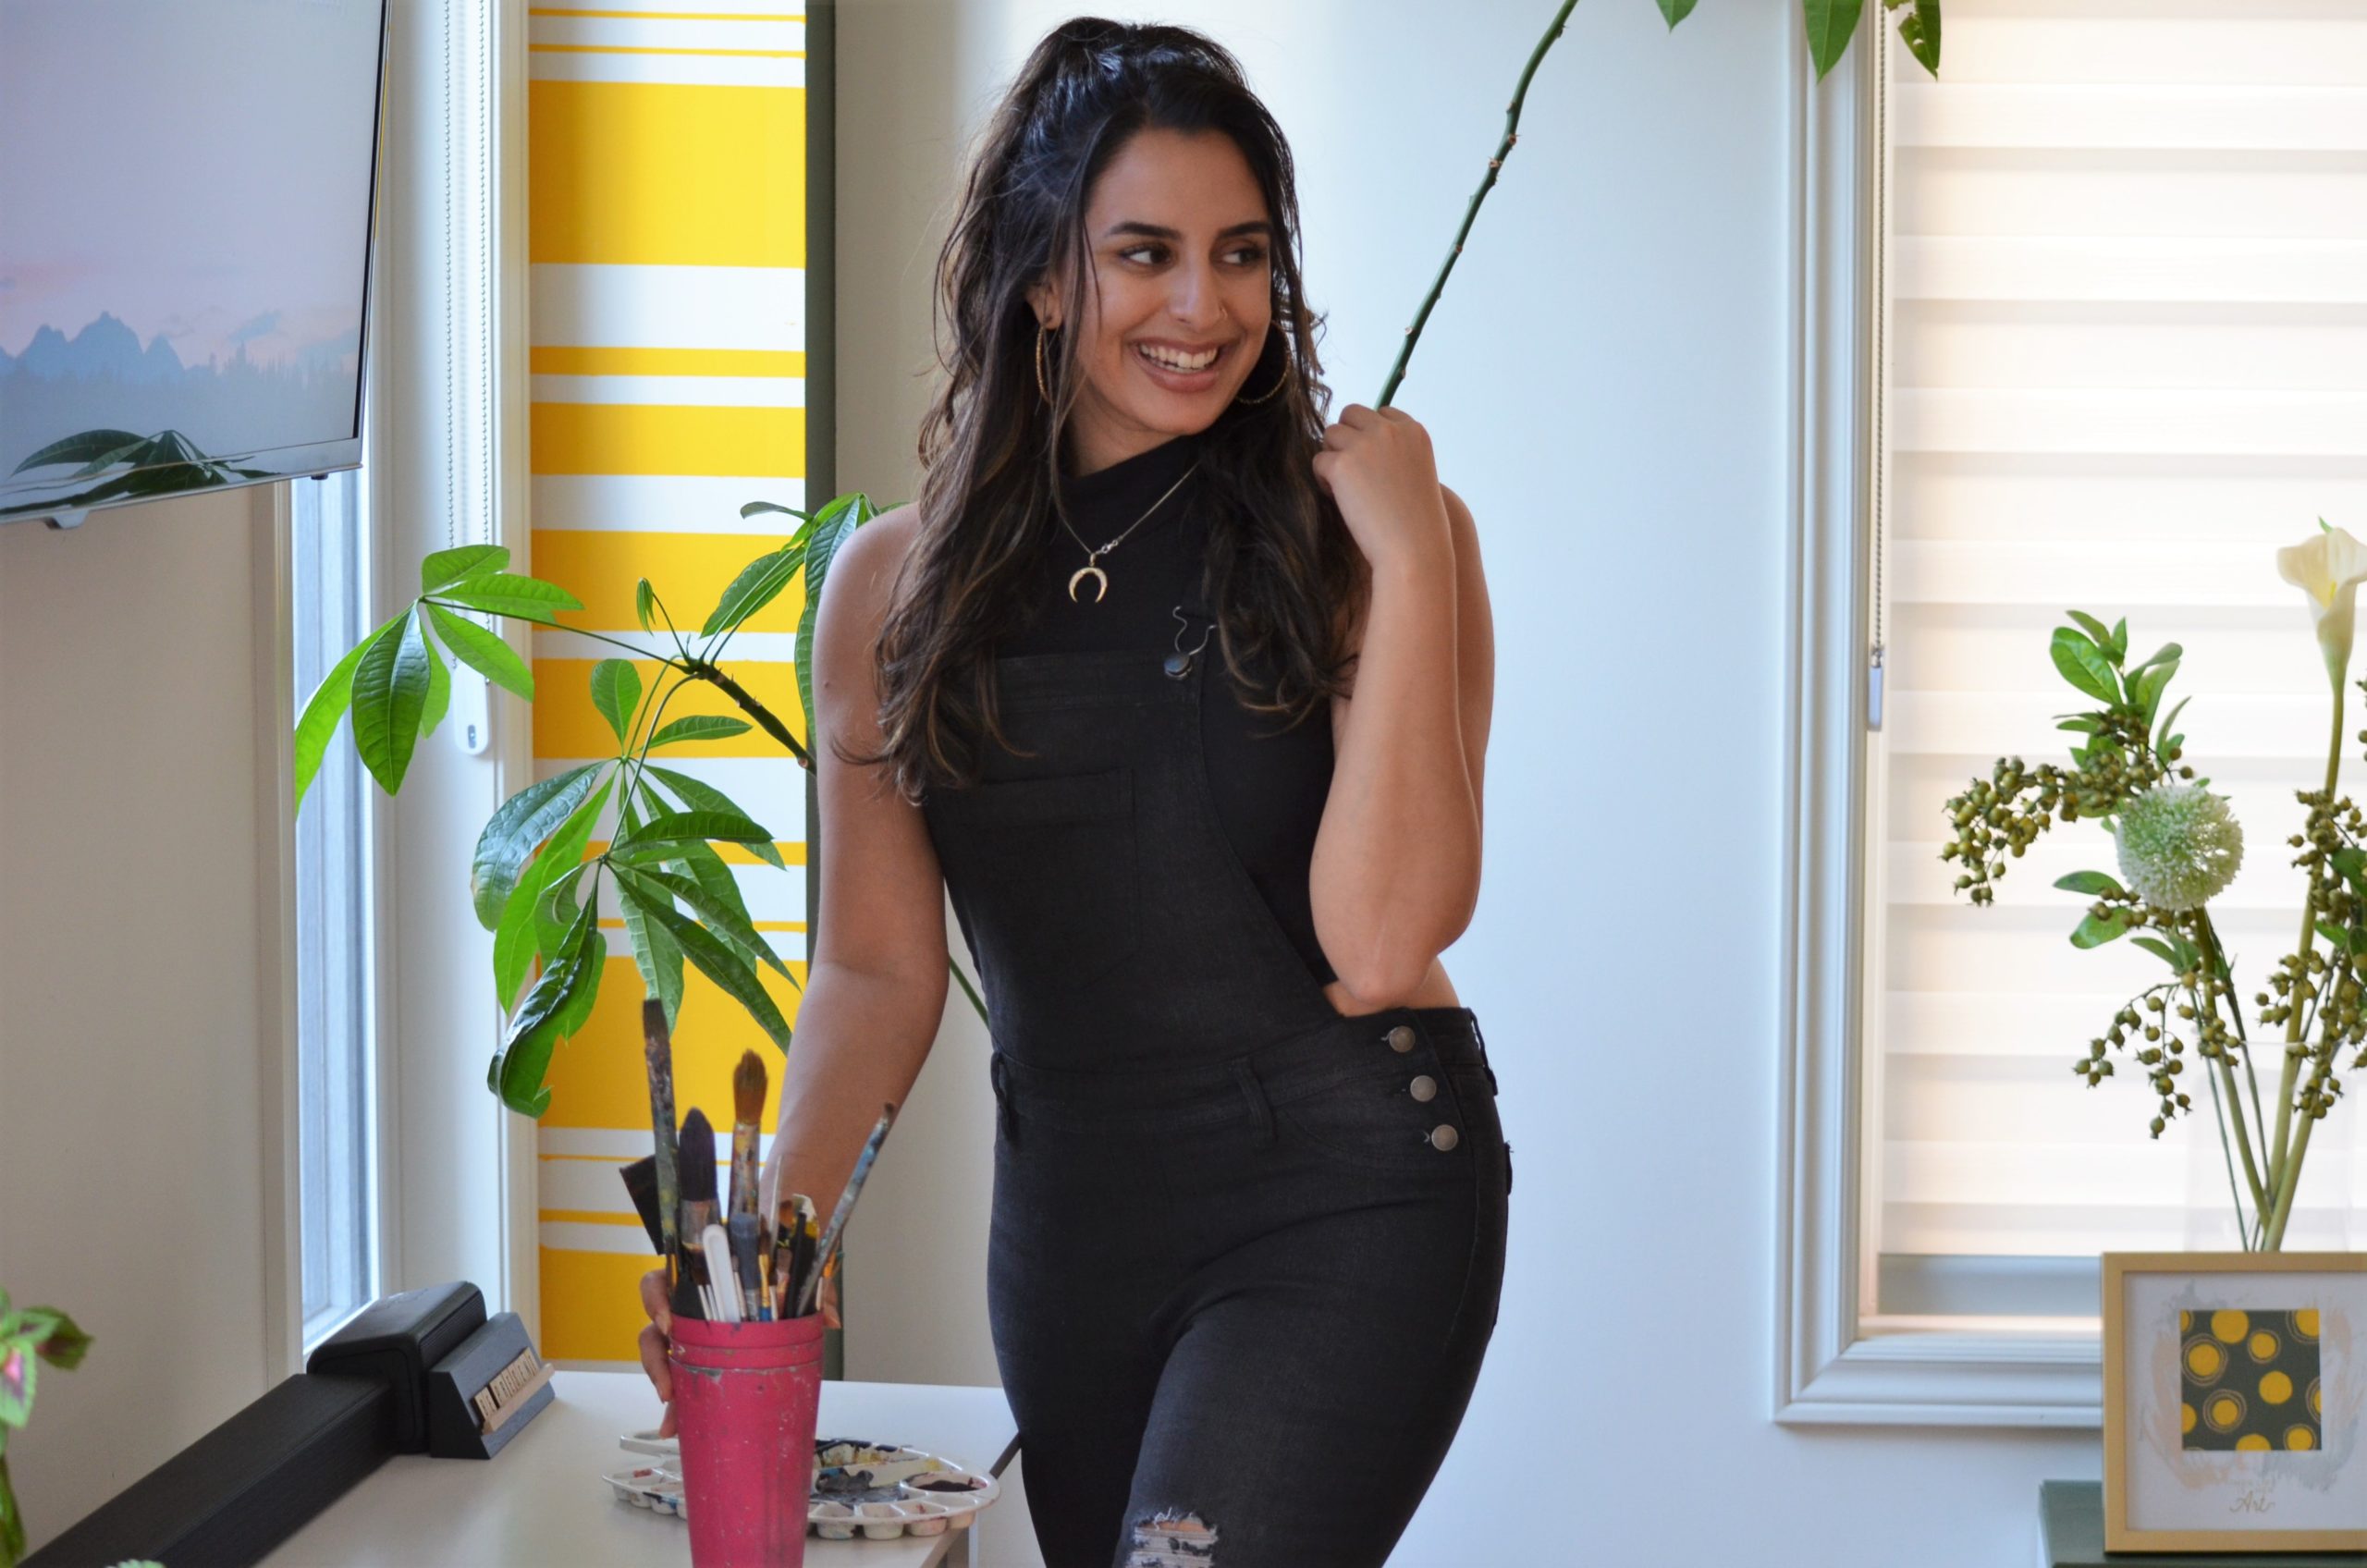 Jasmin Pannu, Toronto art entrepreneur, in her home studio and office